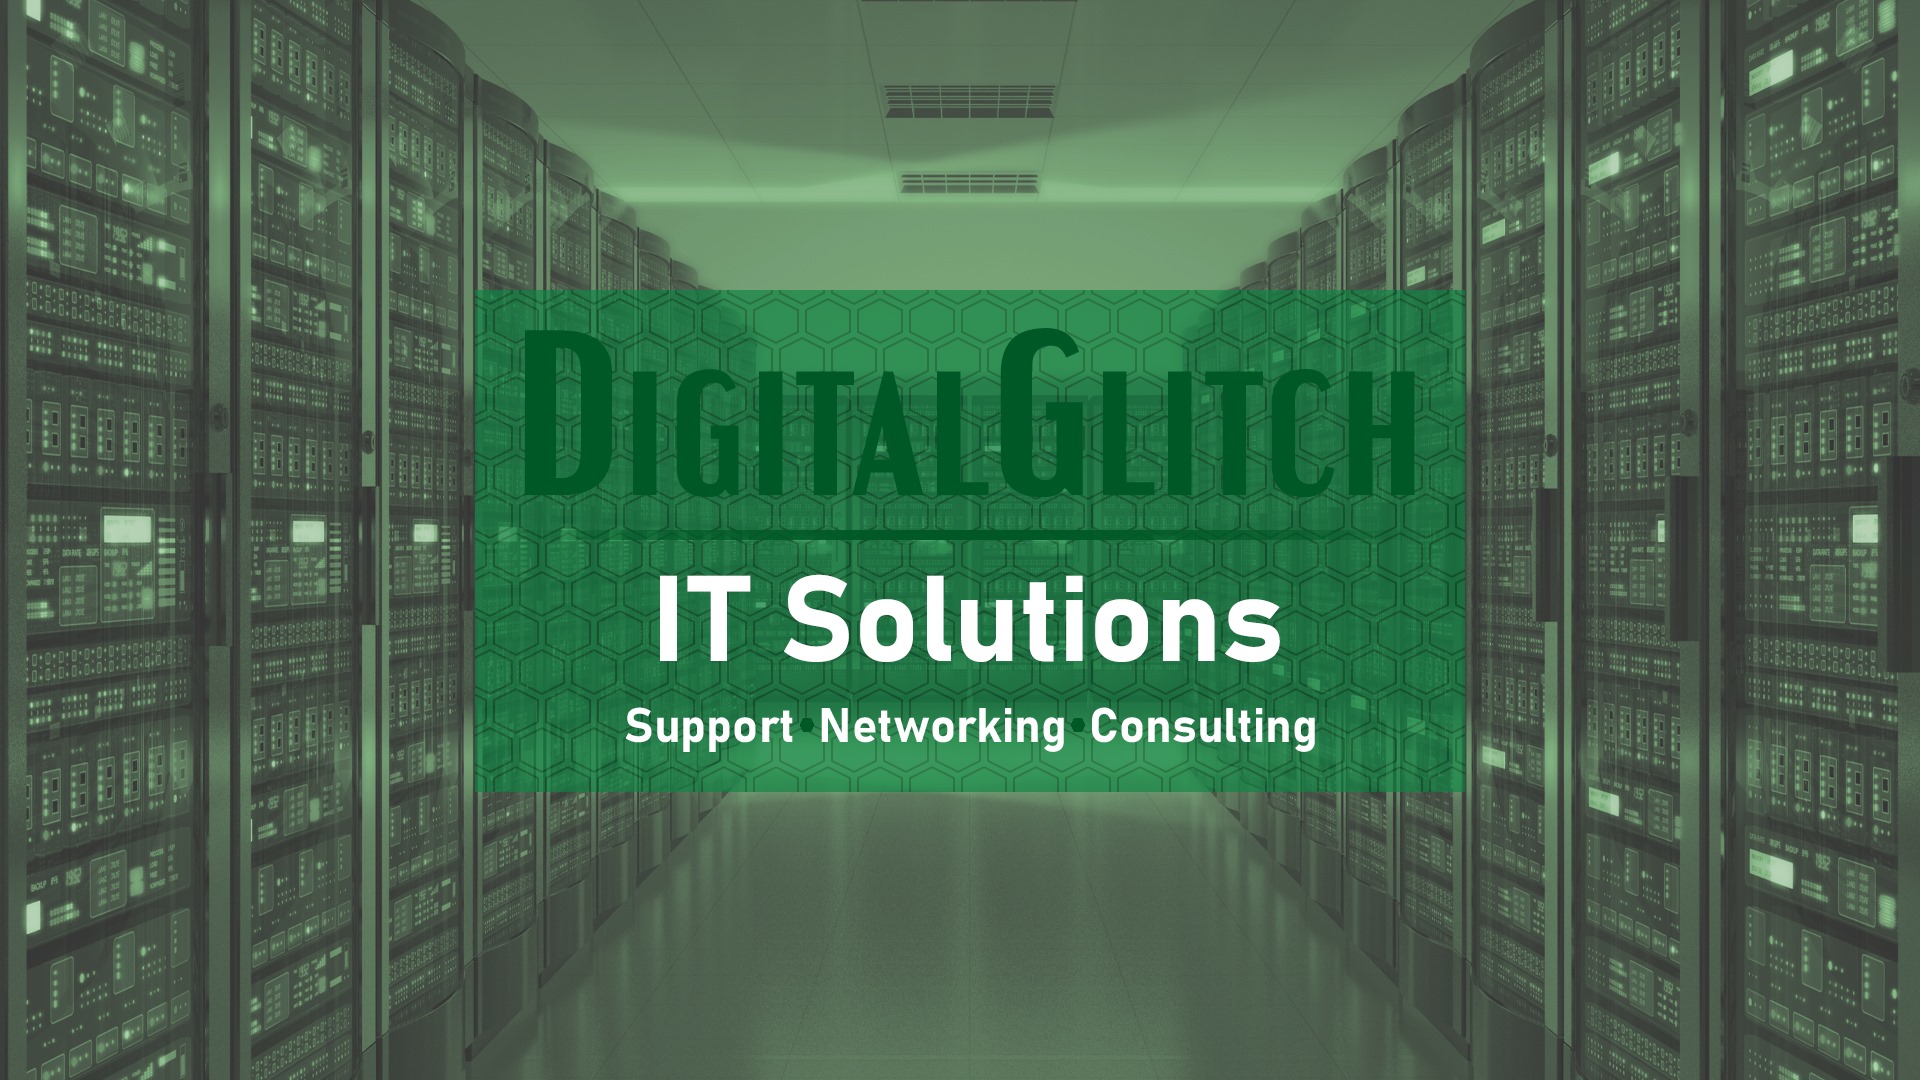 Digital Glitch IT Solutions